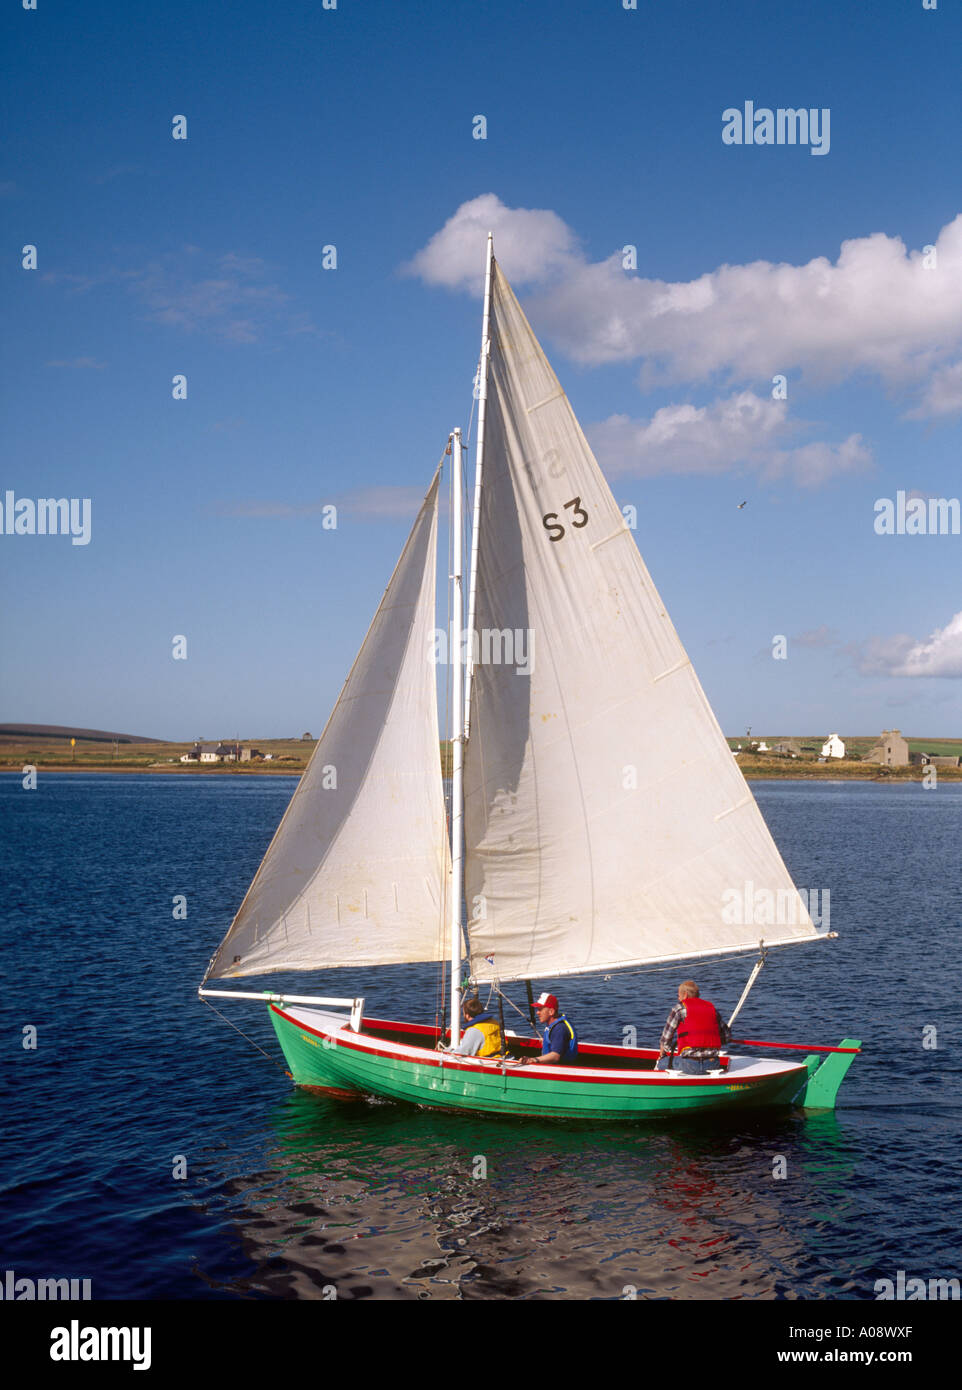 dh Longhope Regatta HOY ORKNEY Scottish Traditional Orkney Yole voiliers feuille blanche voiles écosse yacht personnes isle Banque D'Images